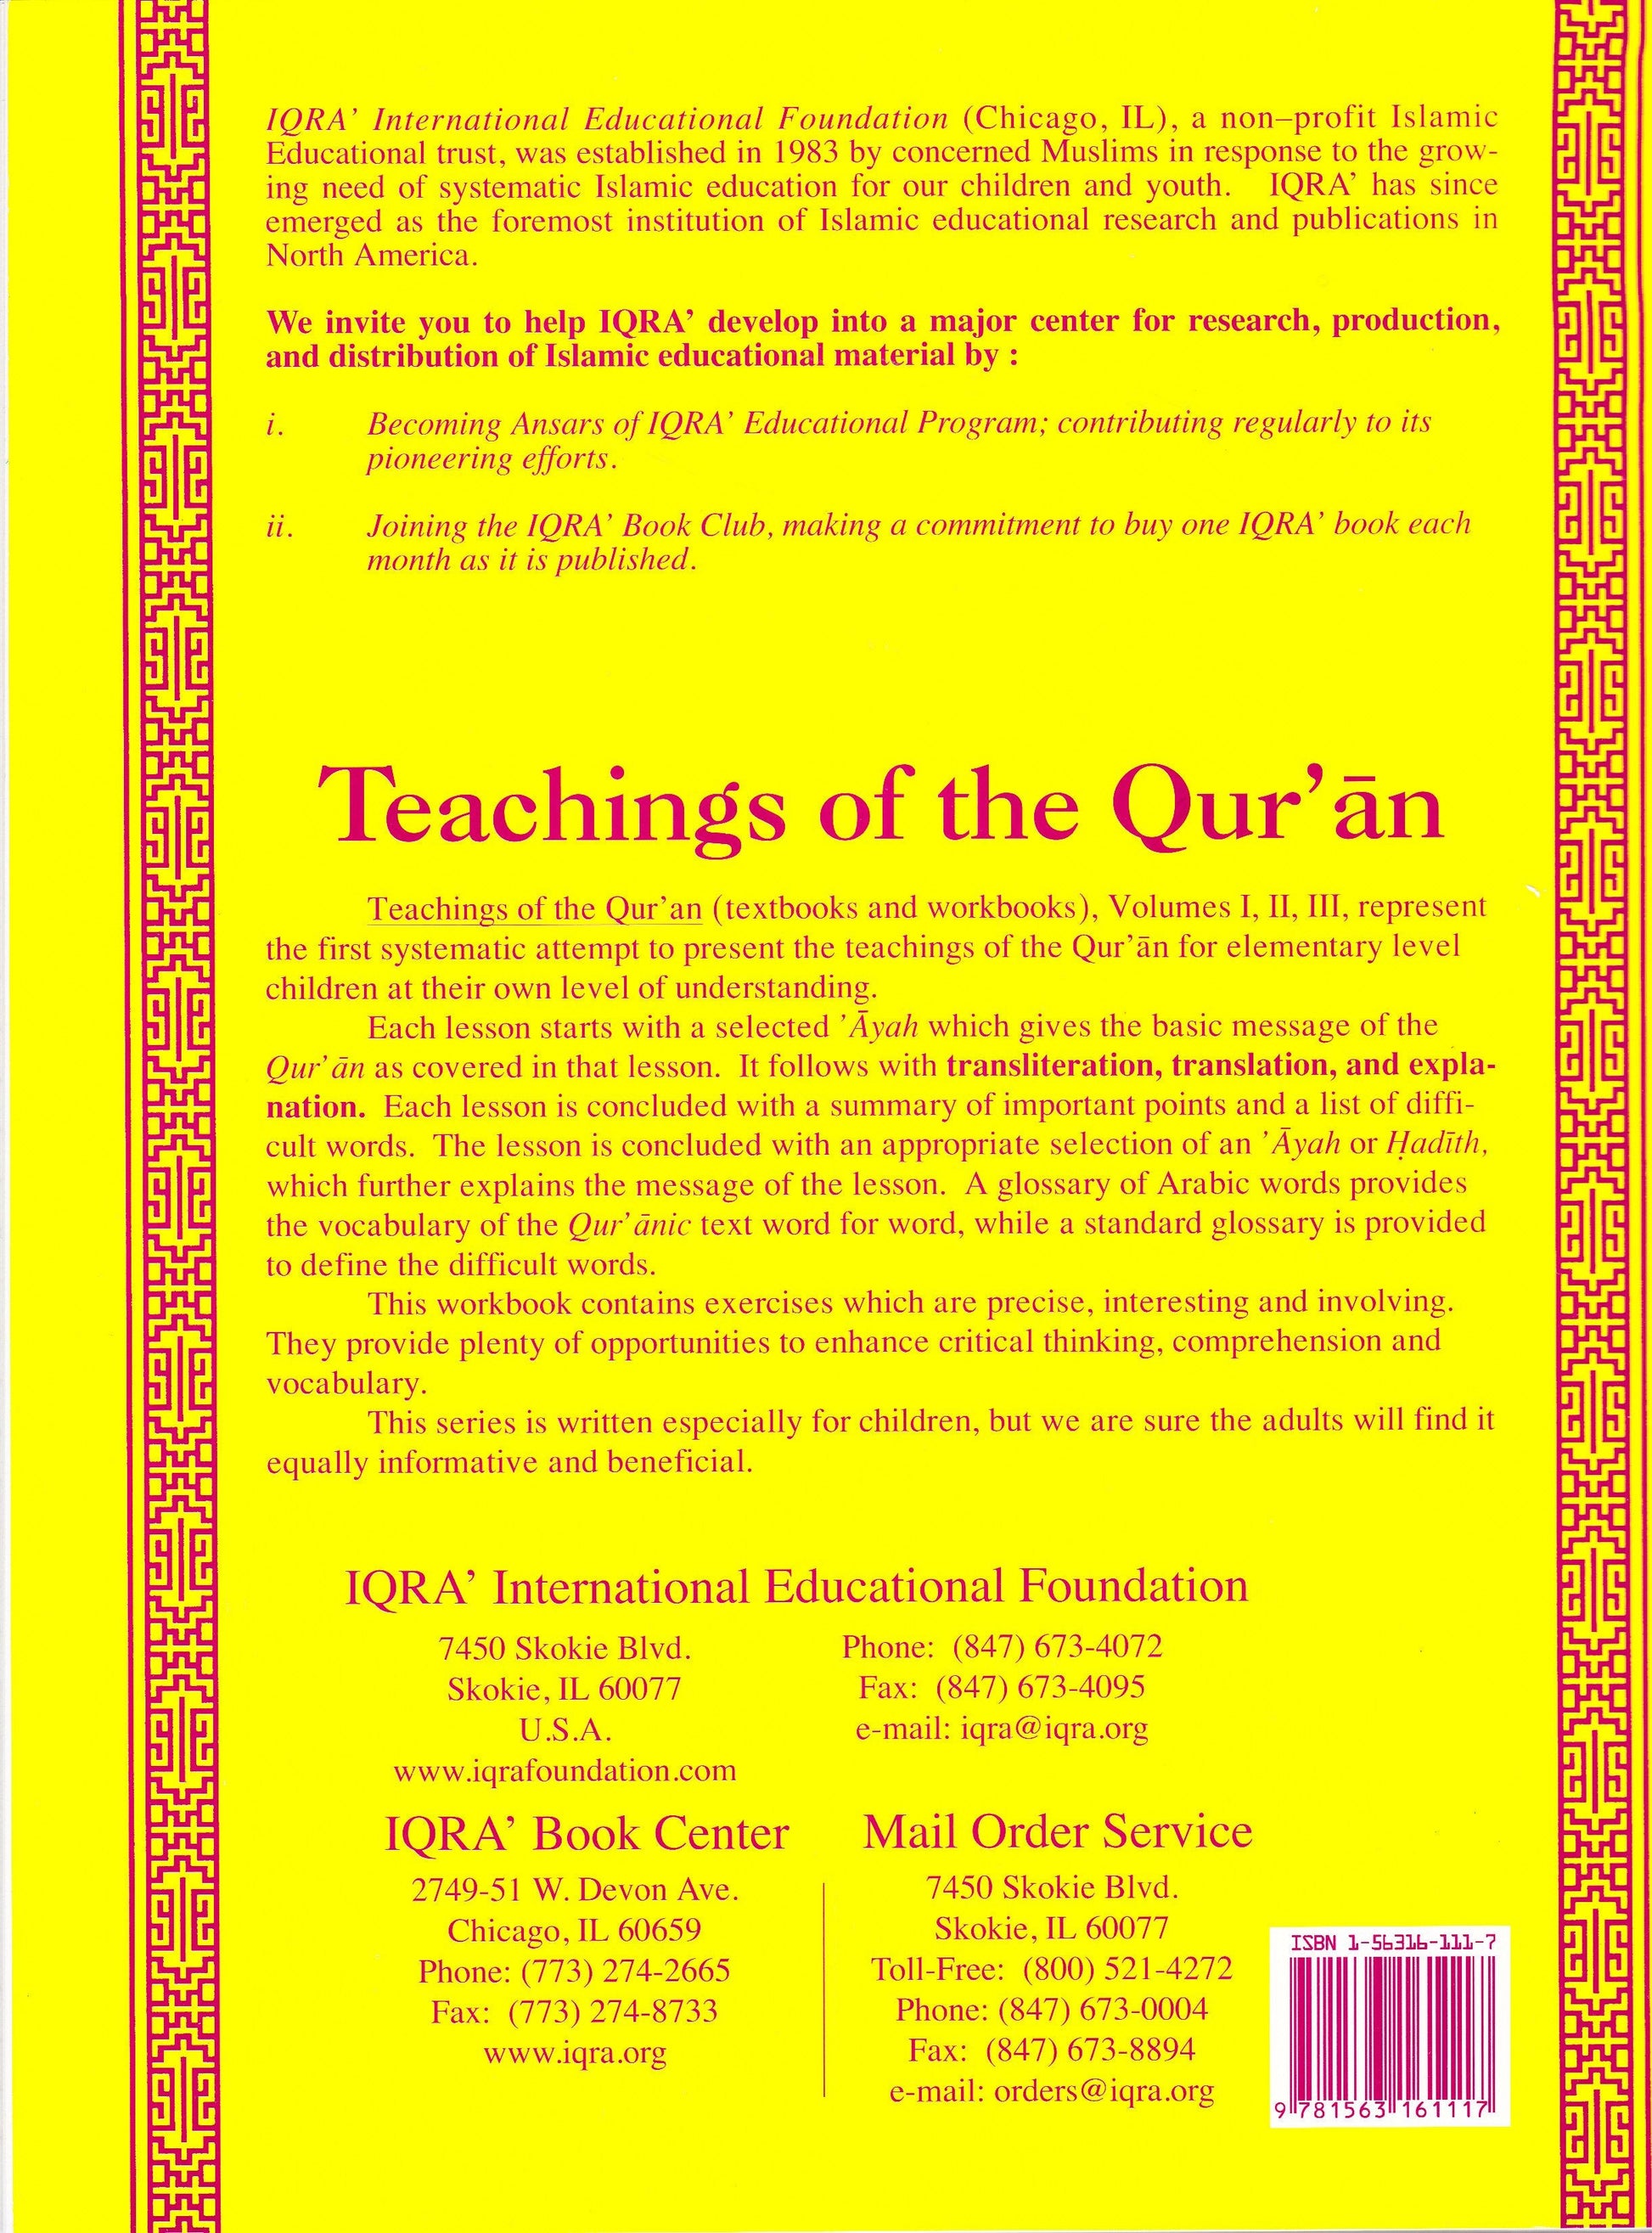 Teachings of Qur'an, Volume 1 Workbook - Premium Workbook from IQRA' international Educational Foundation - Just $7! Shop now at IQRA' international Educational Foundation